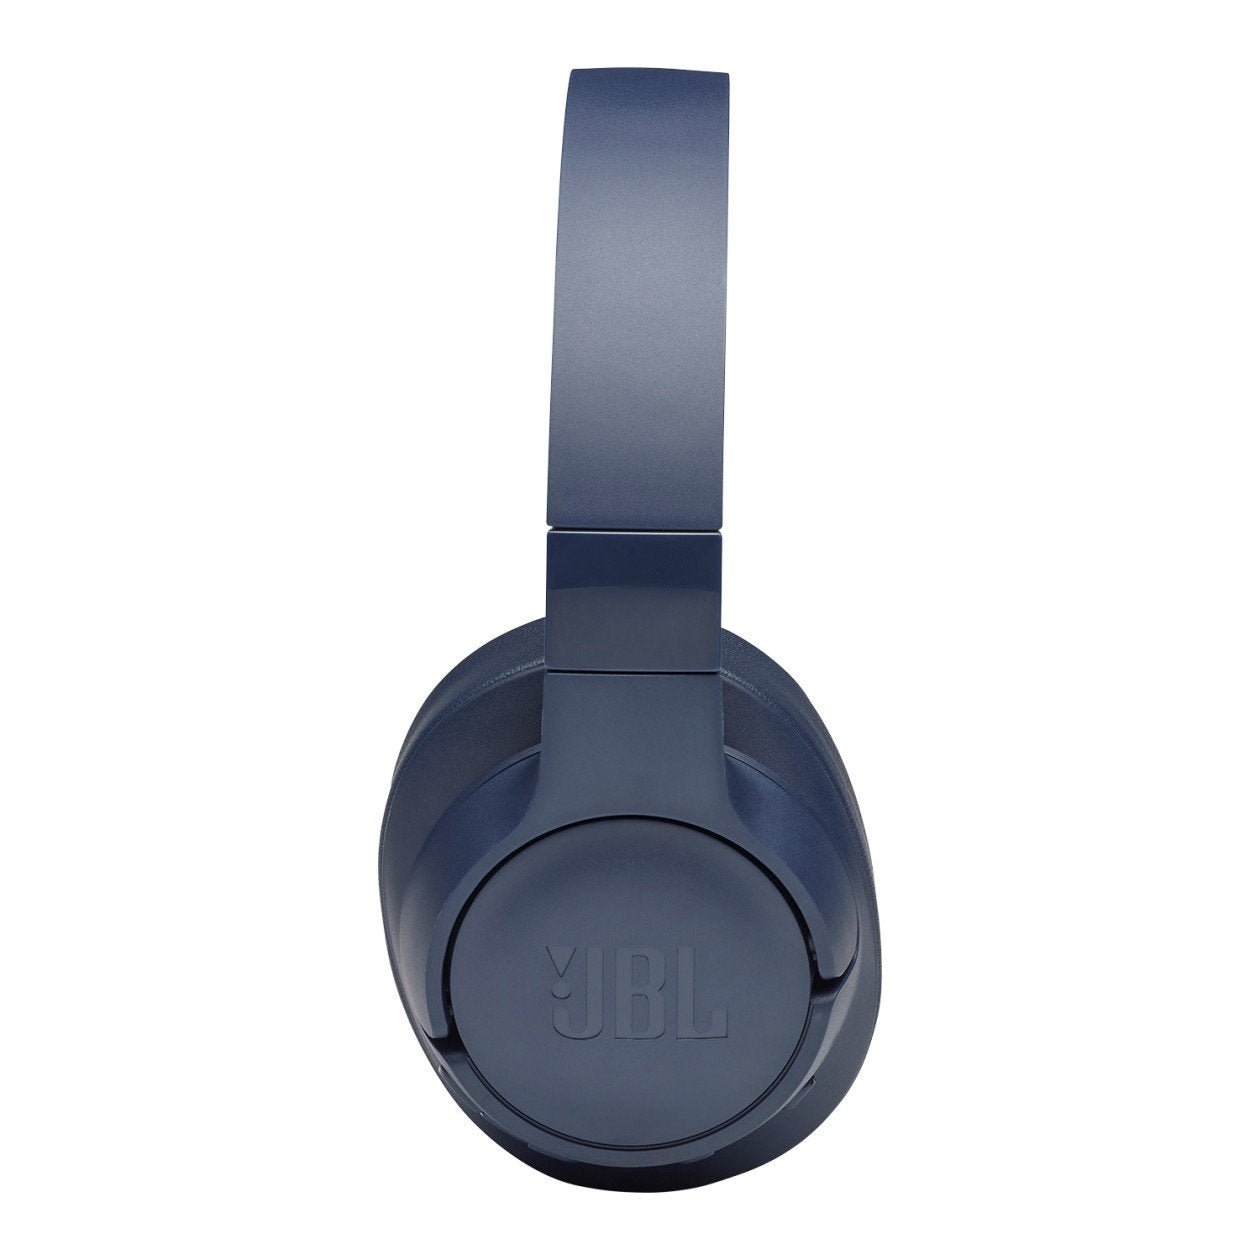 JBL T750 Over-Ear Noise-Cancelling Wireless Headphone - Blue